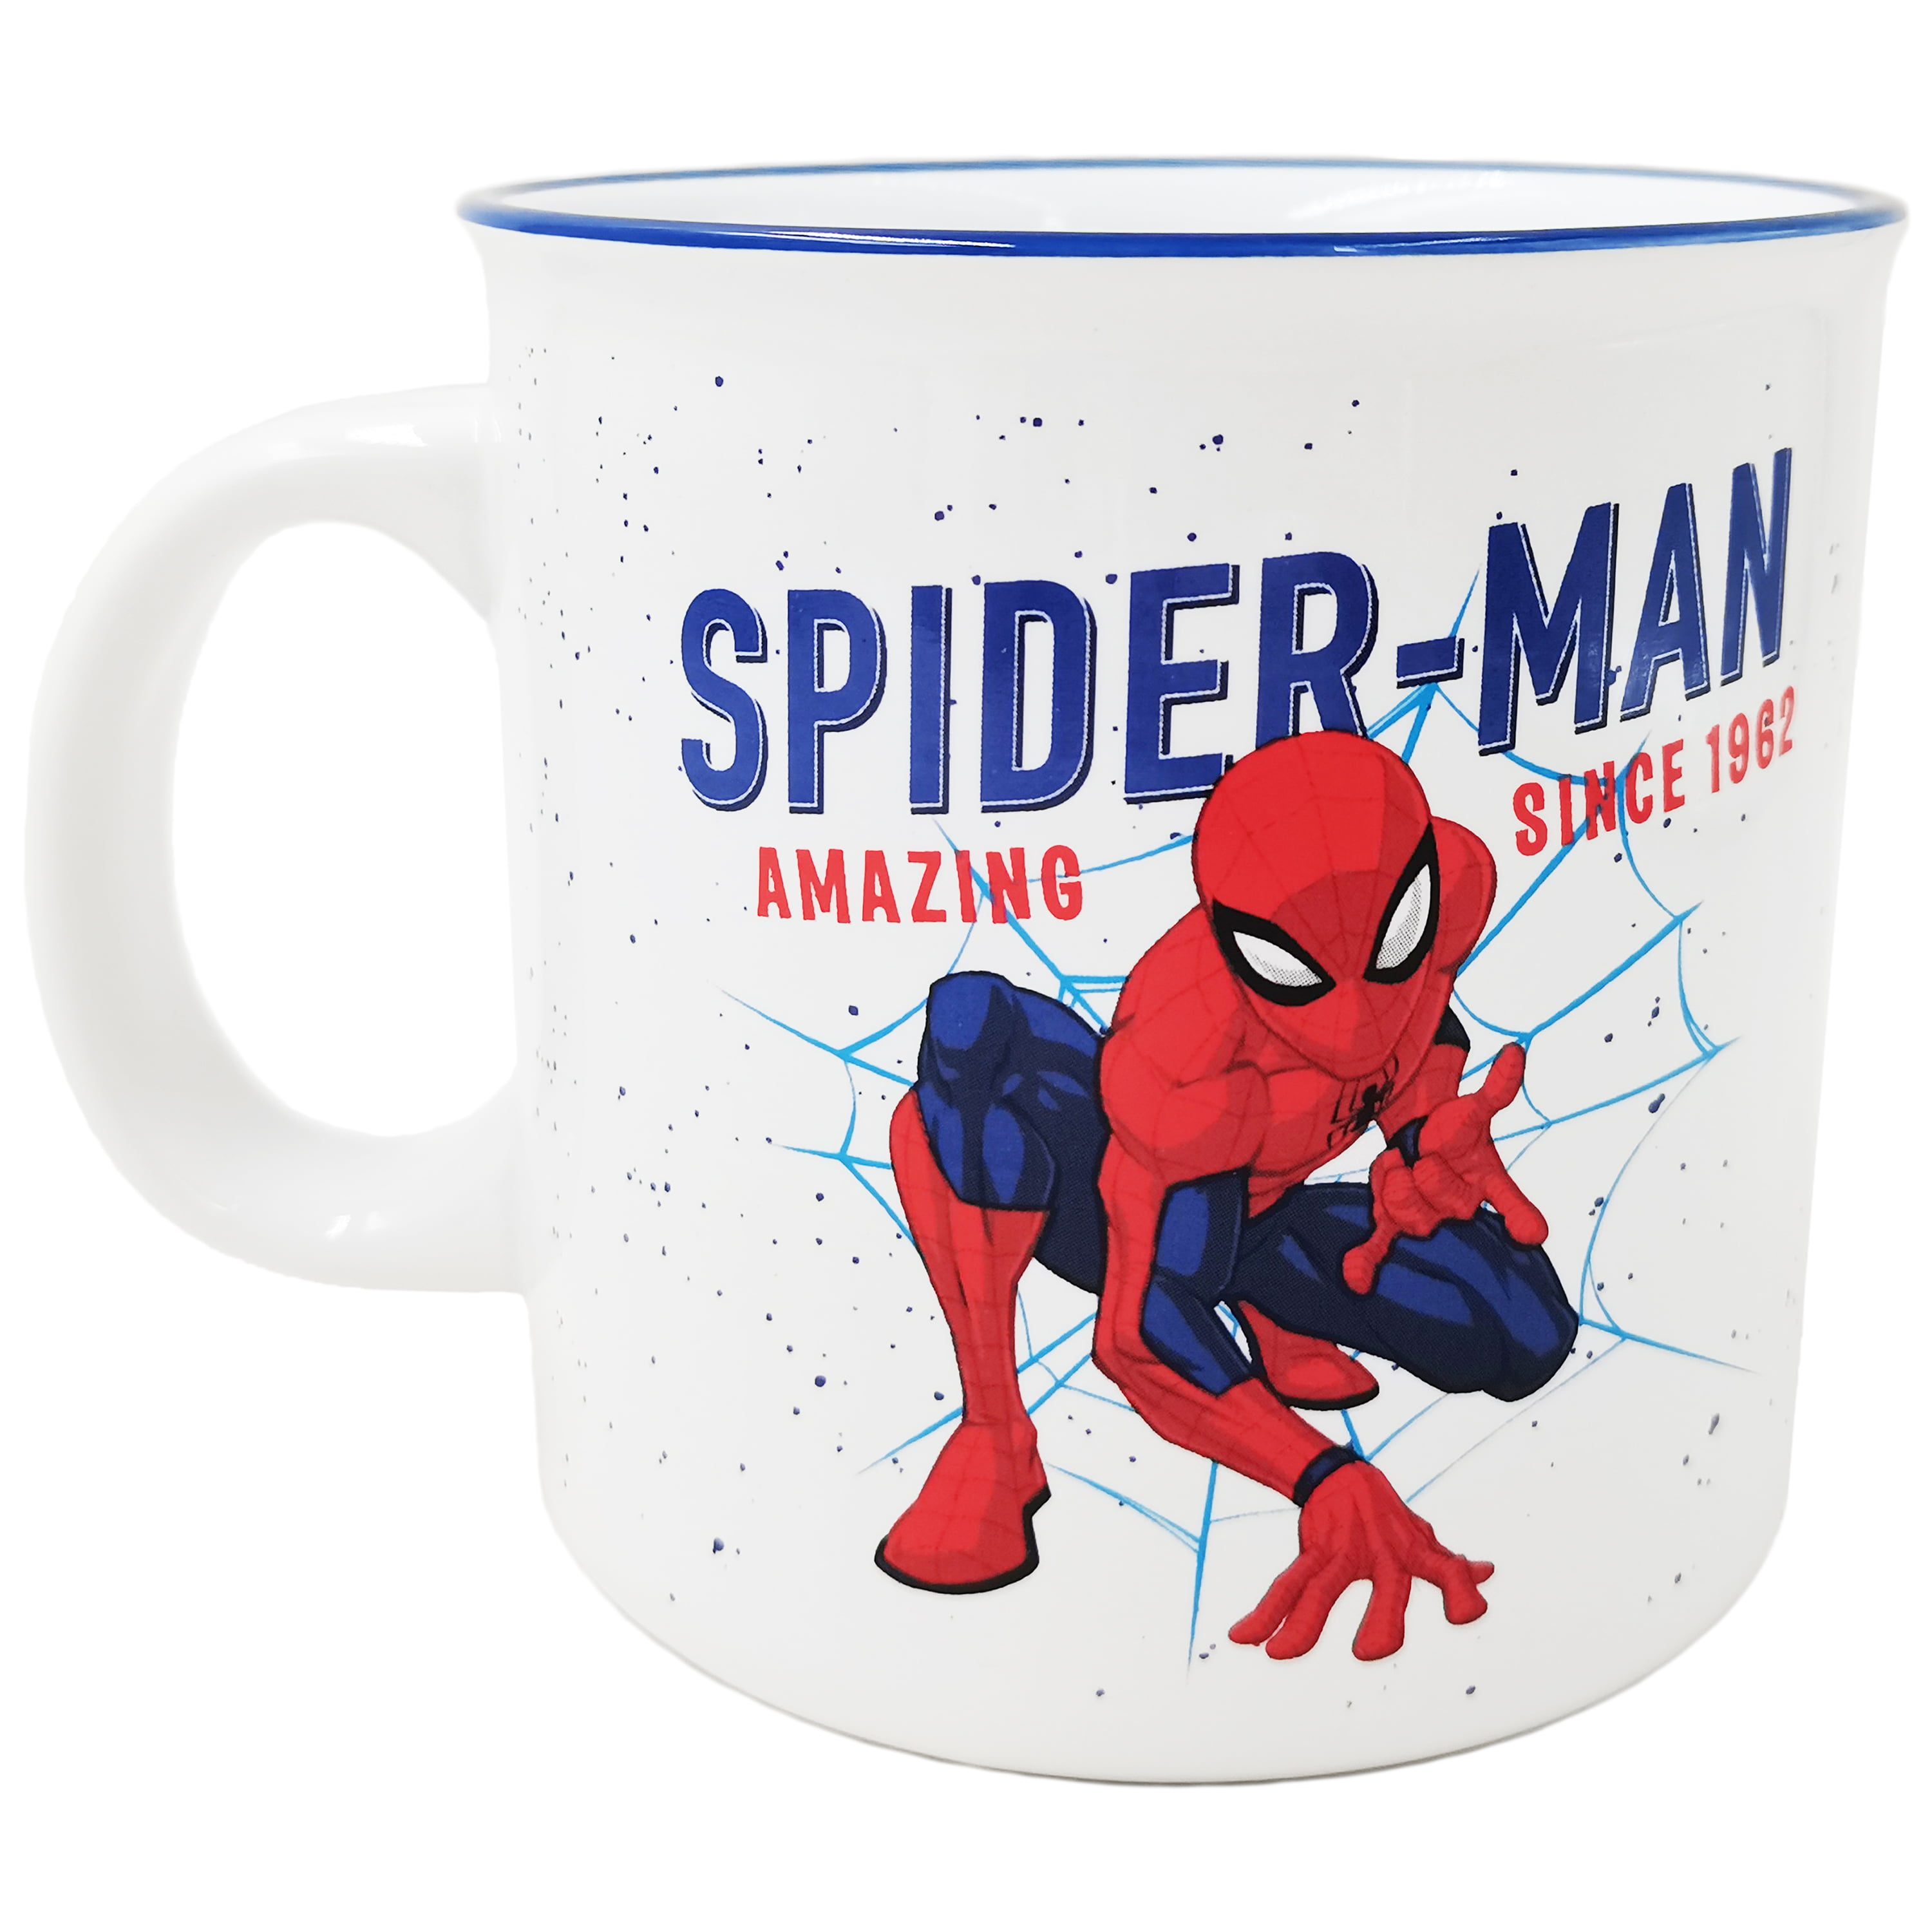 SWAAG ZONE SPIDER MAN MUG FOR KIDS Plastic Coffee Mug Price in